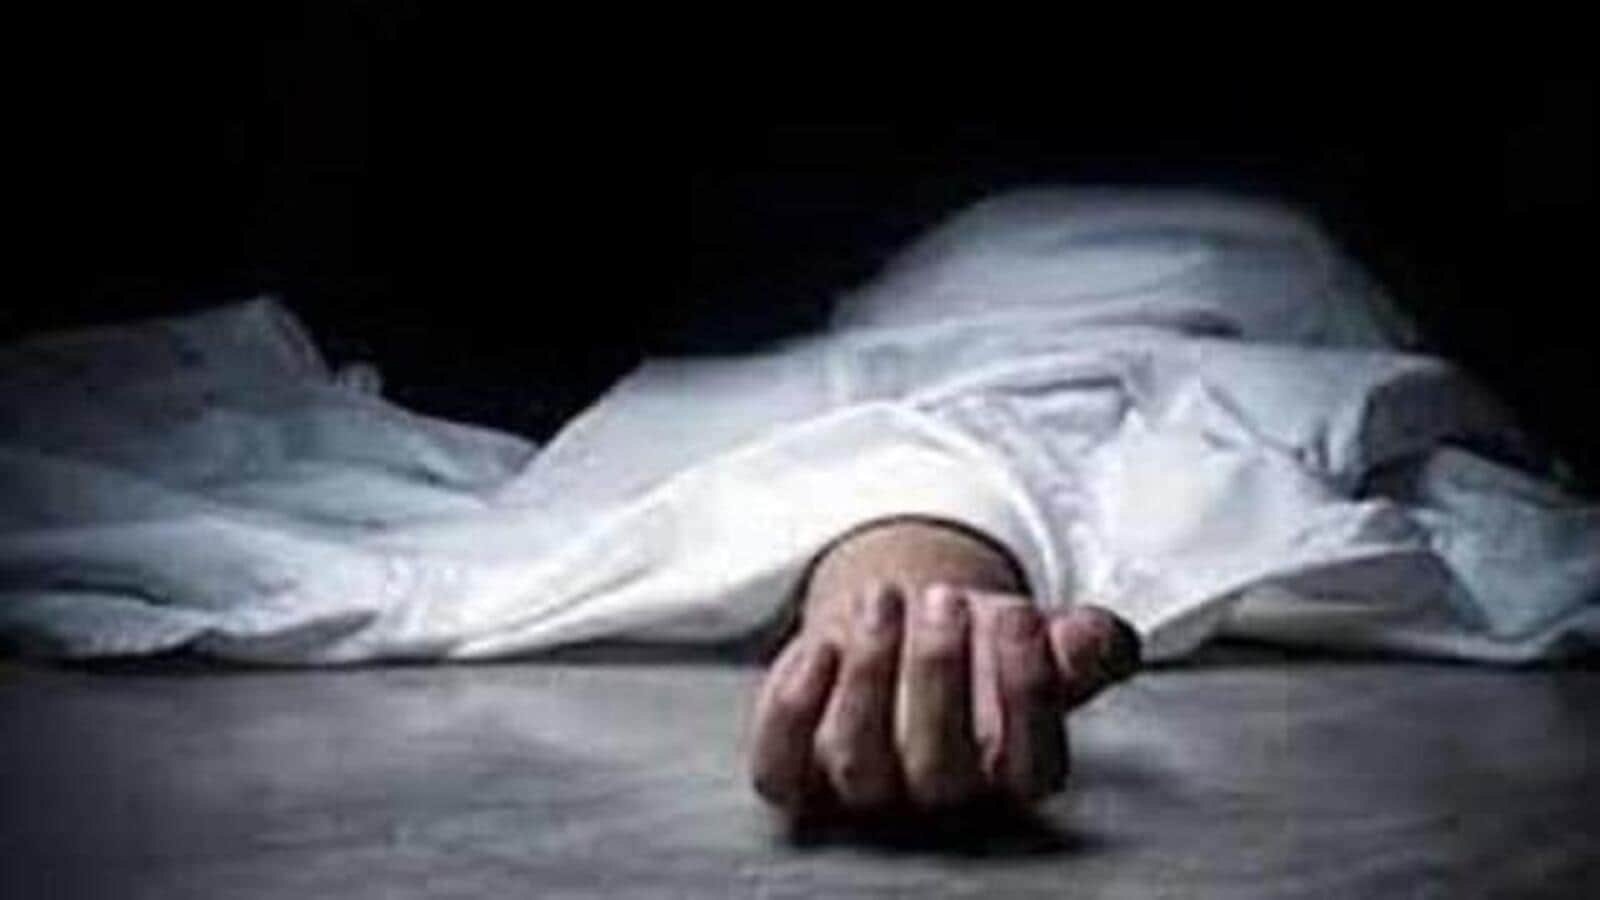 Delhi woman, 55, 2 daughters found dead at home: Suicide, suffocation  suspected | Latest News Delhi - Hindustan Times